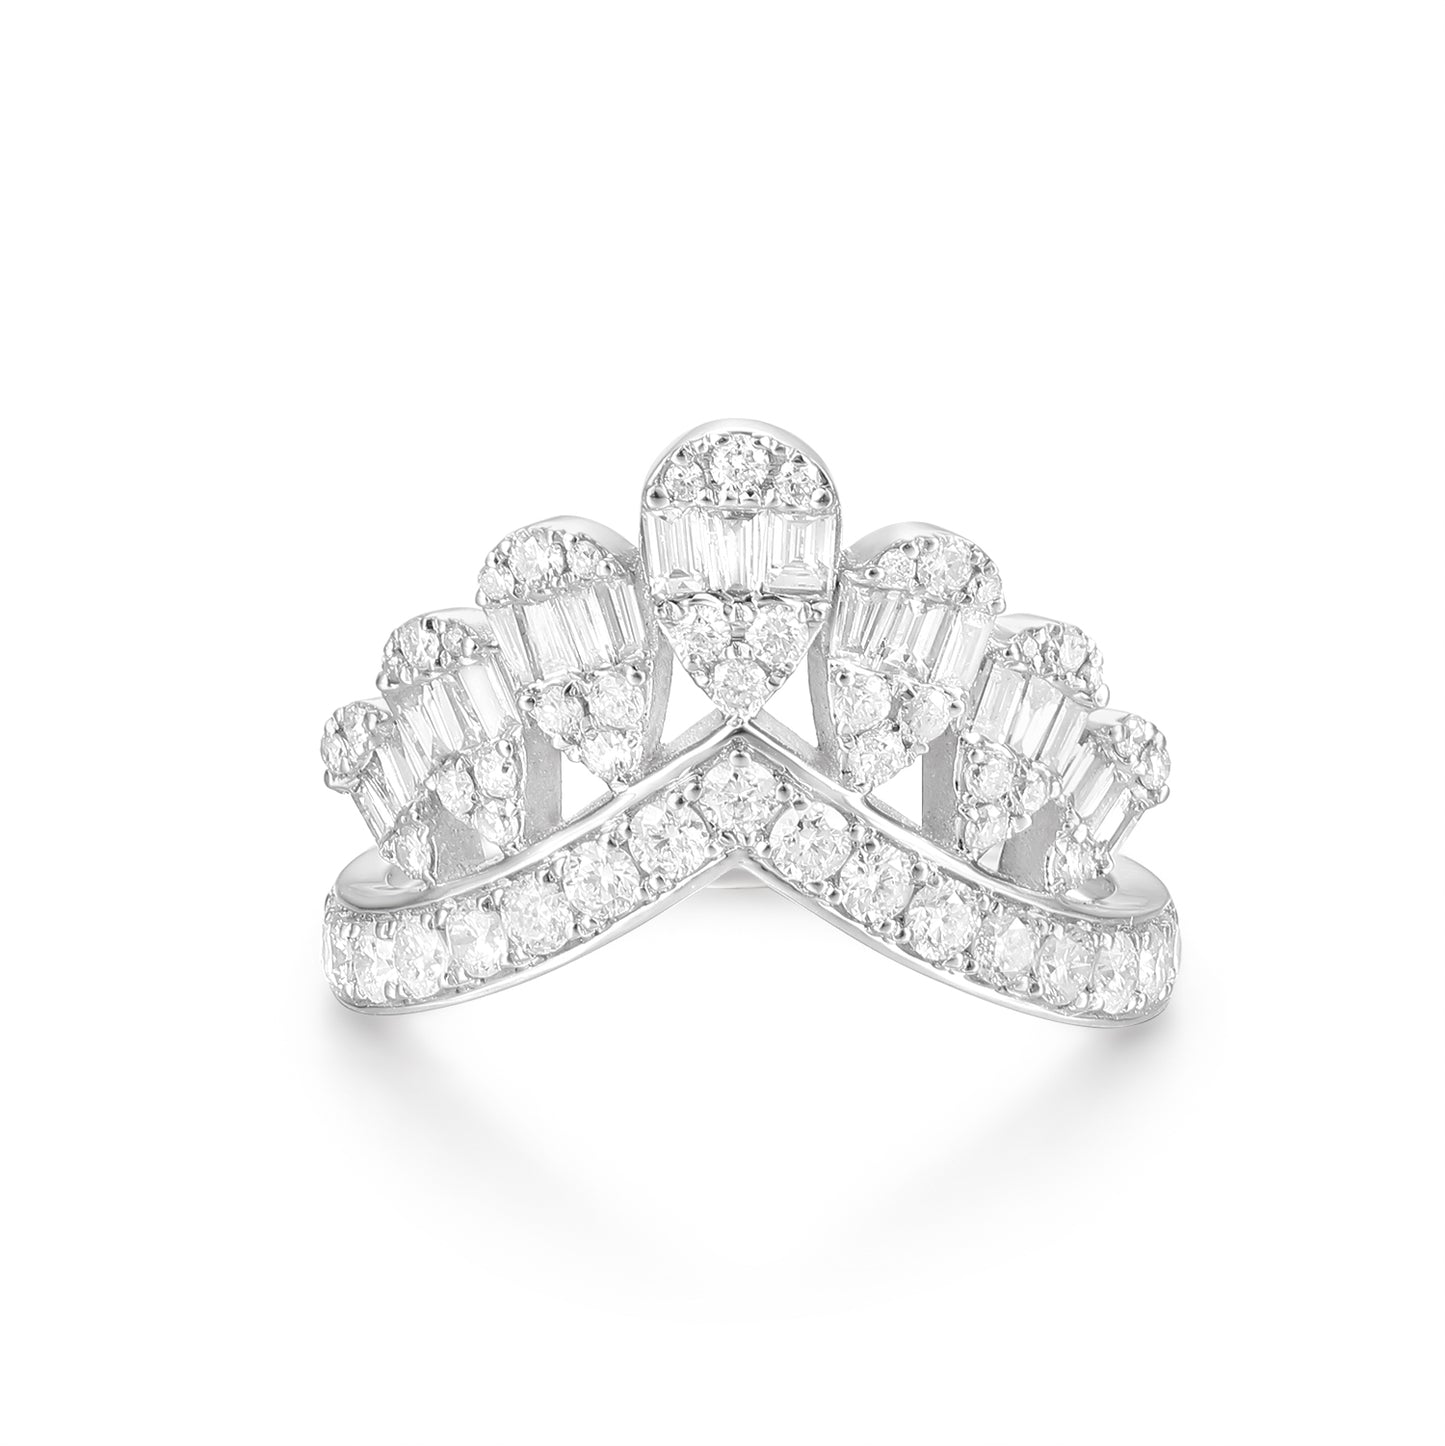 Diamond Engagement Ring&18K White Gold | UP 30% 0FF